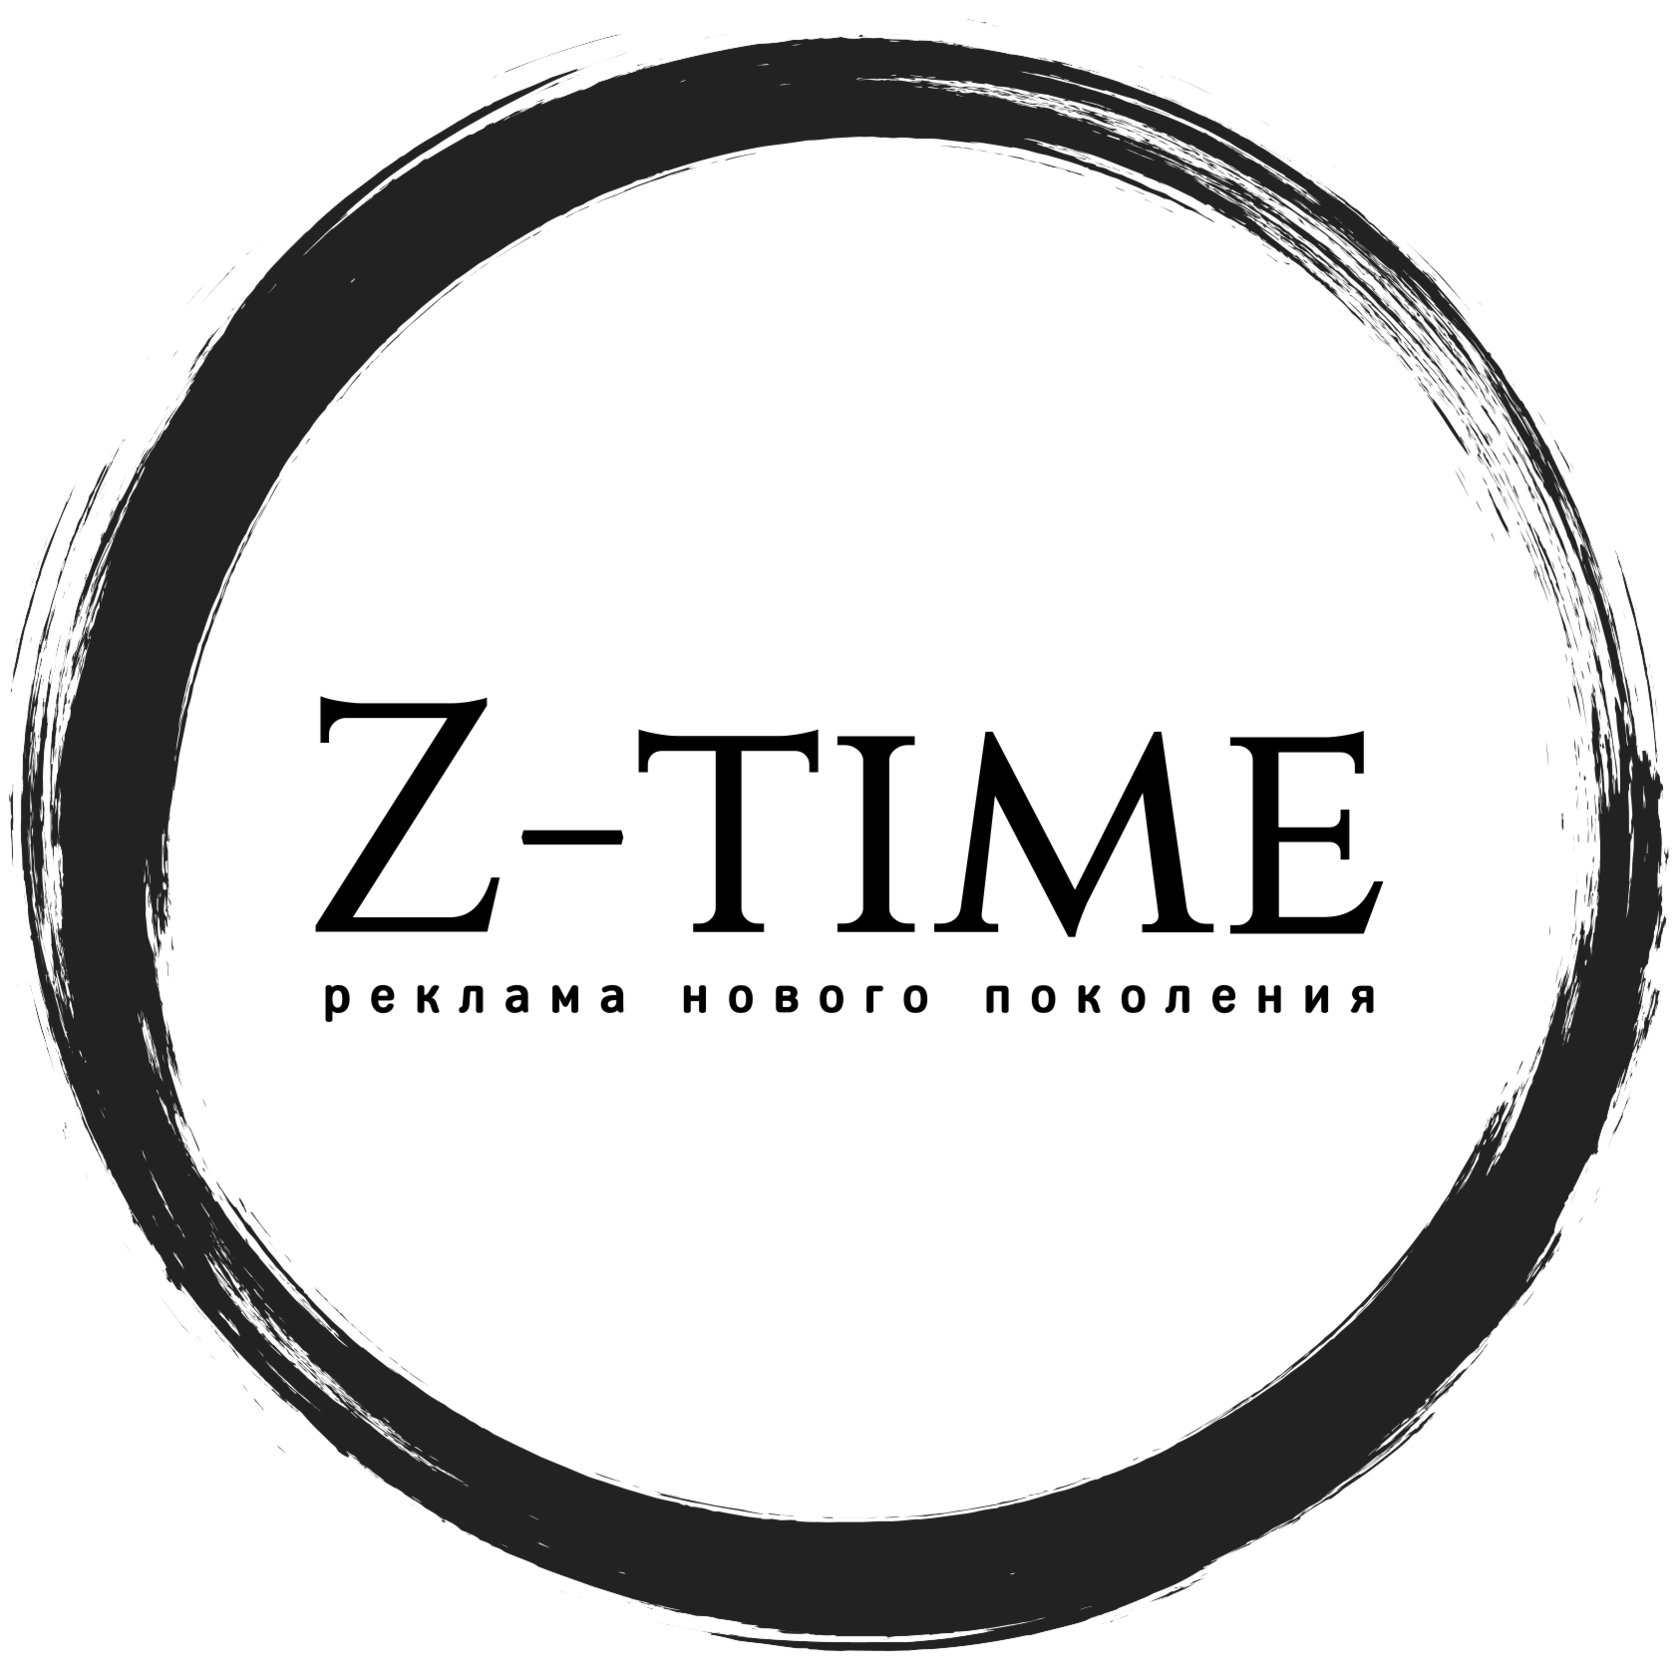 Z-time